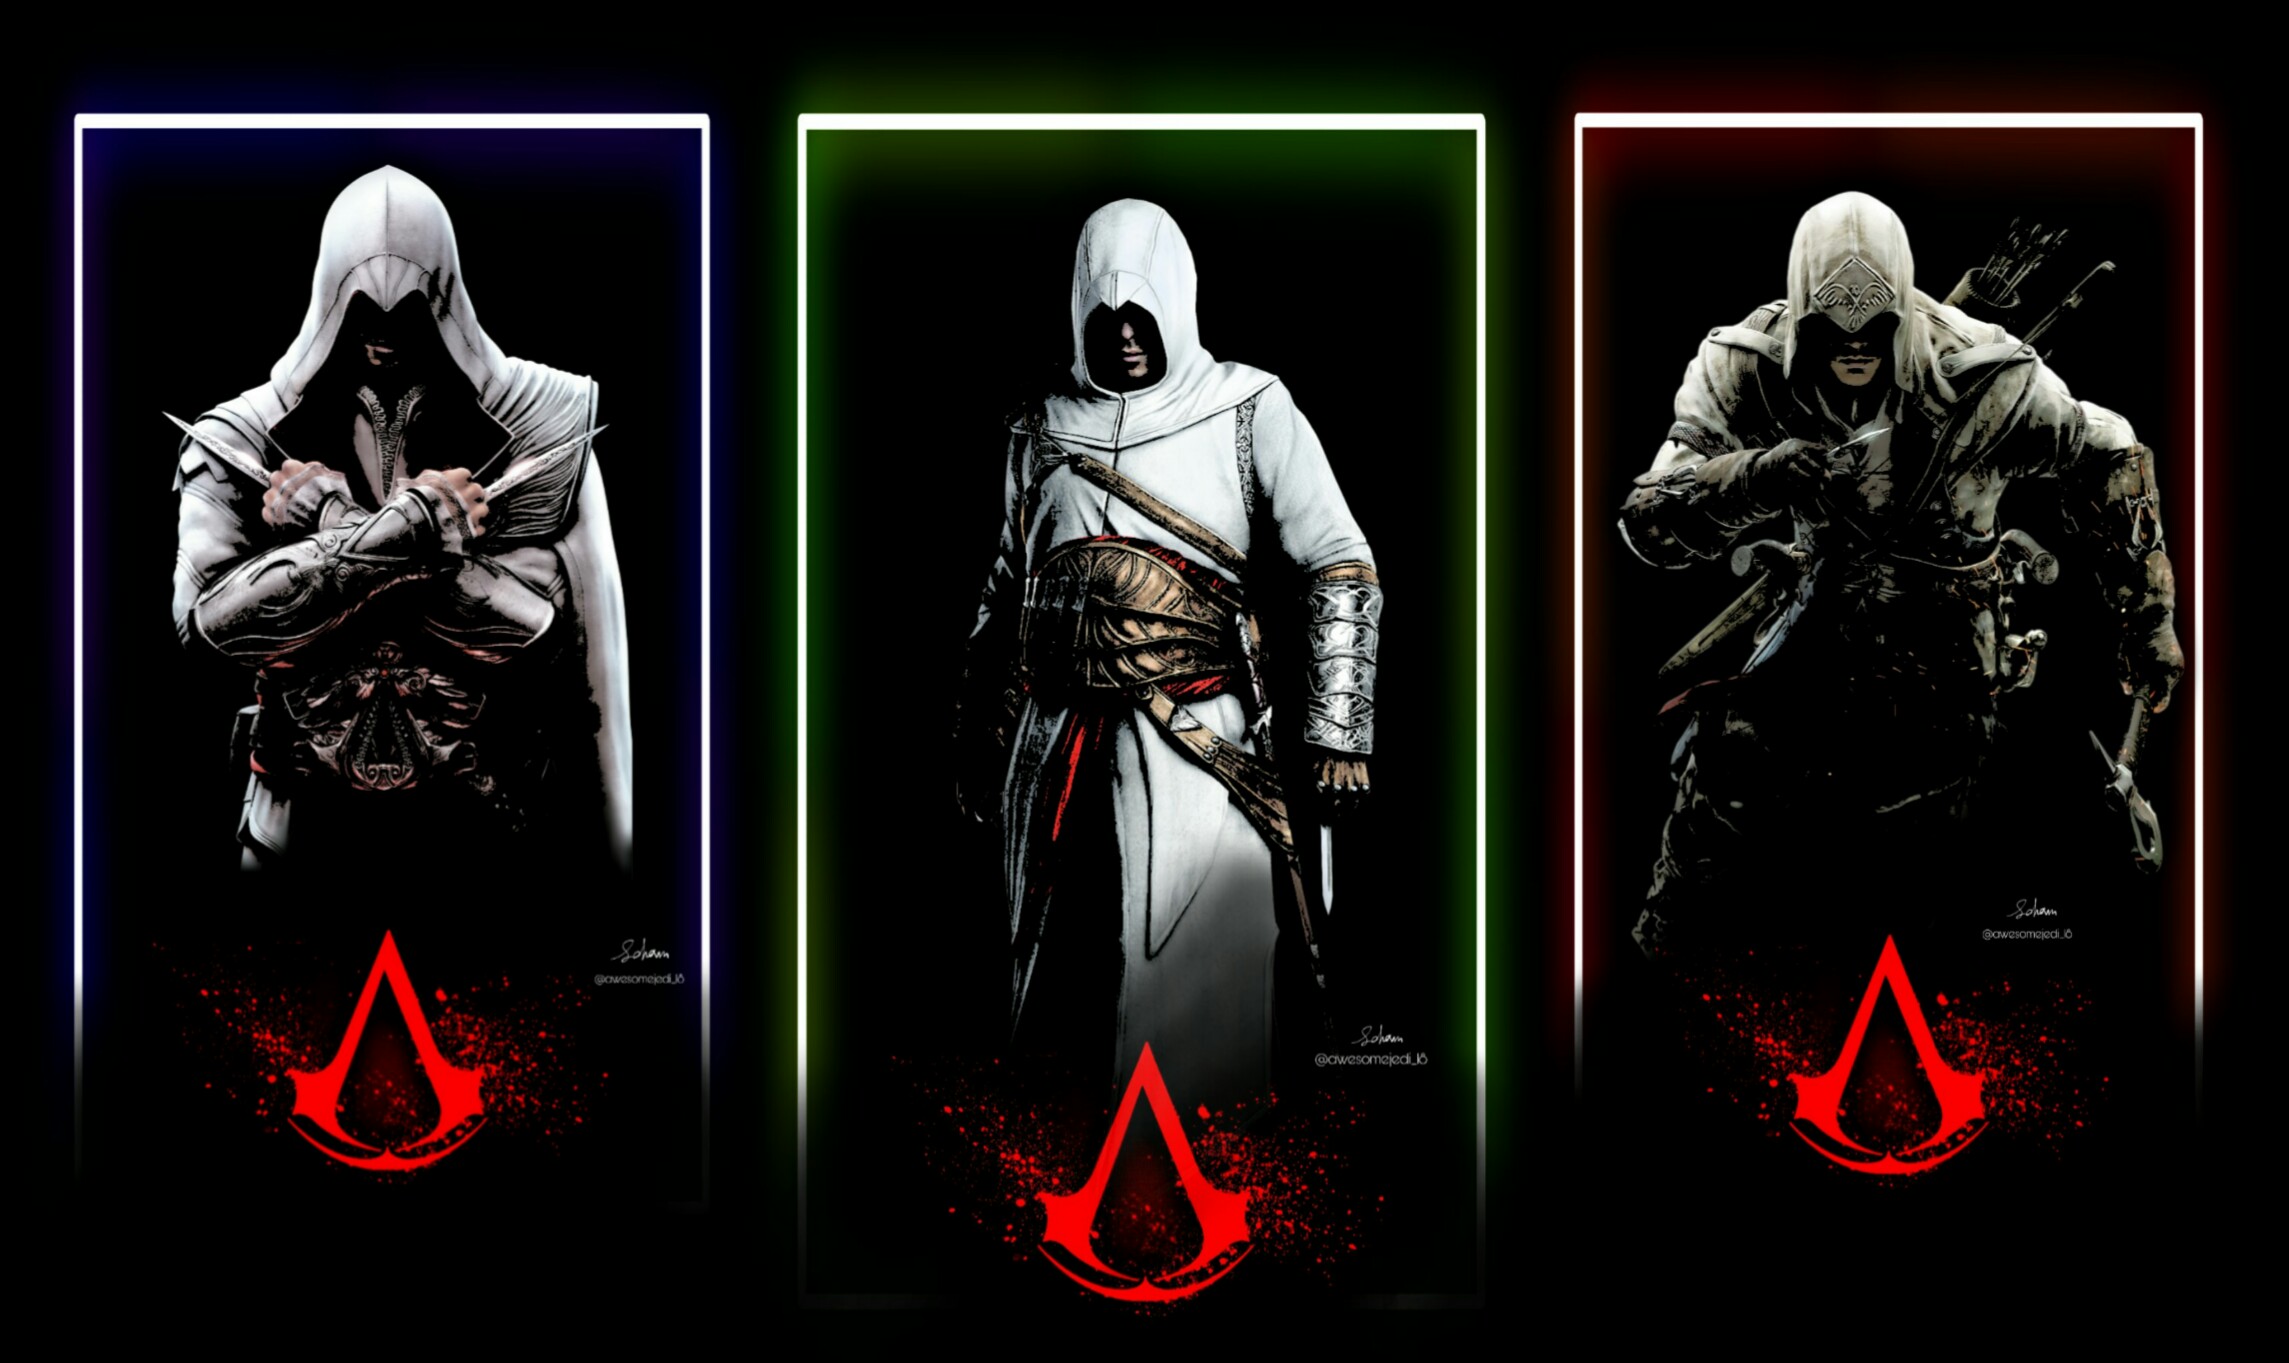 Assassin's Creed Brotherhood - HD Wallpaper 